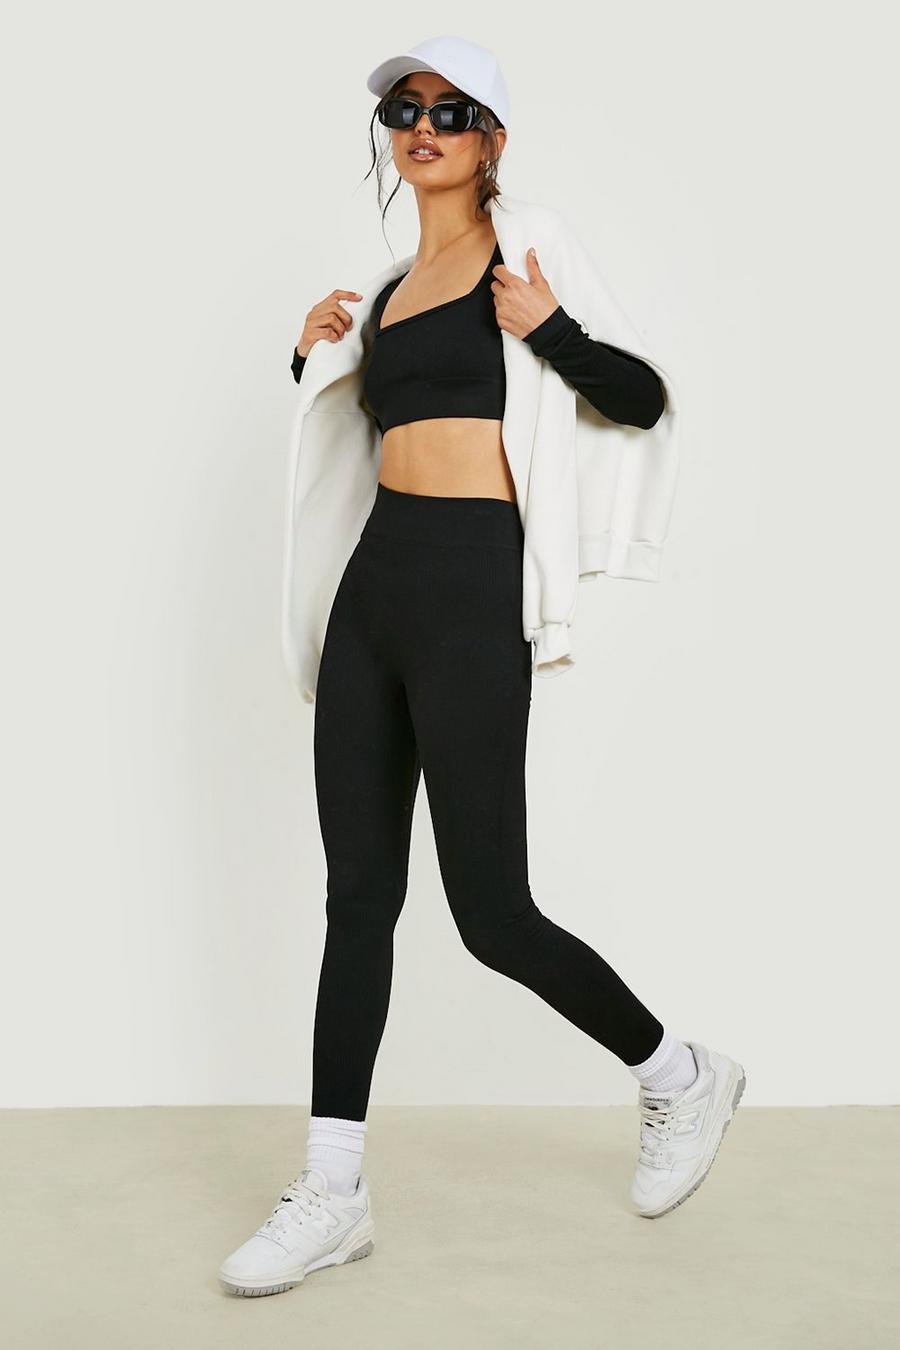 Femme boohoo empiècements sports gym jogging exercice leggings pantalon 